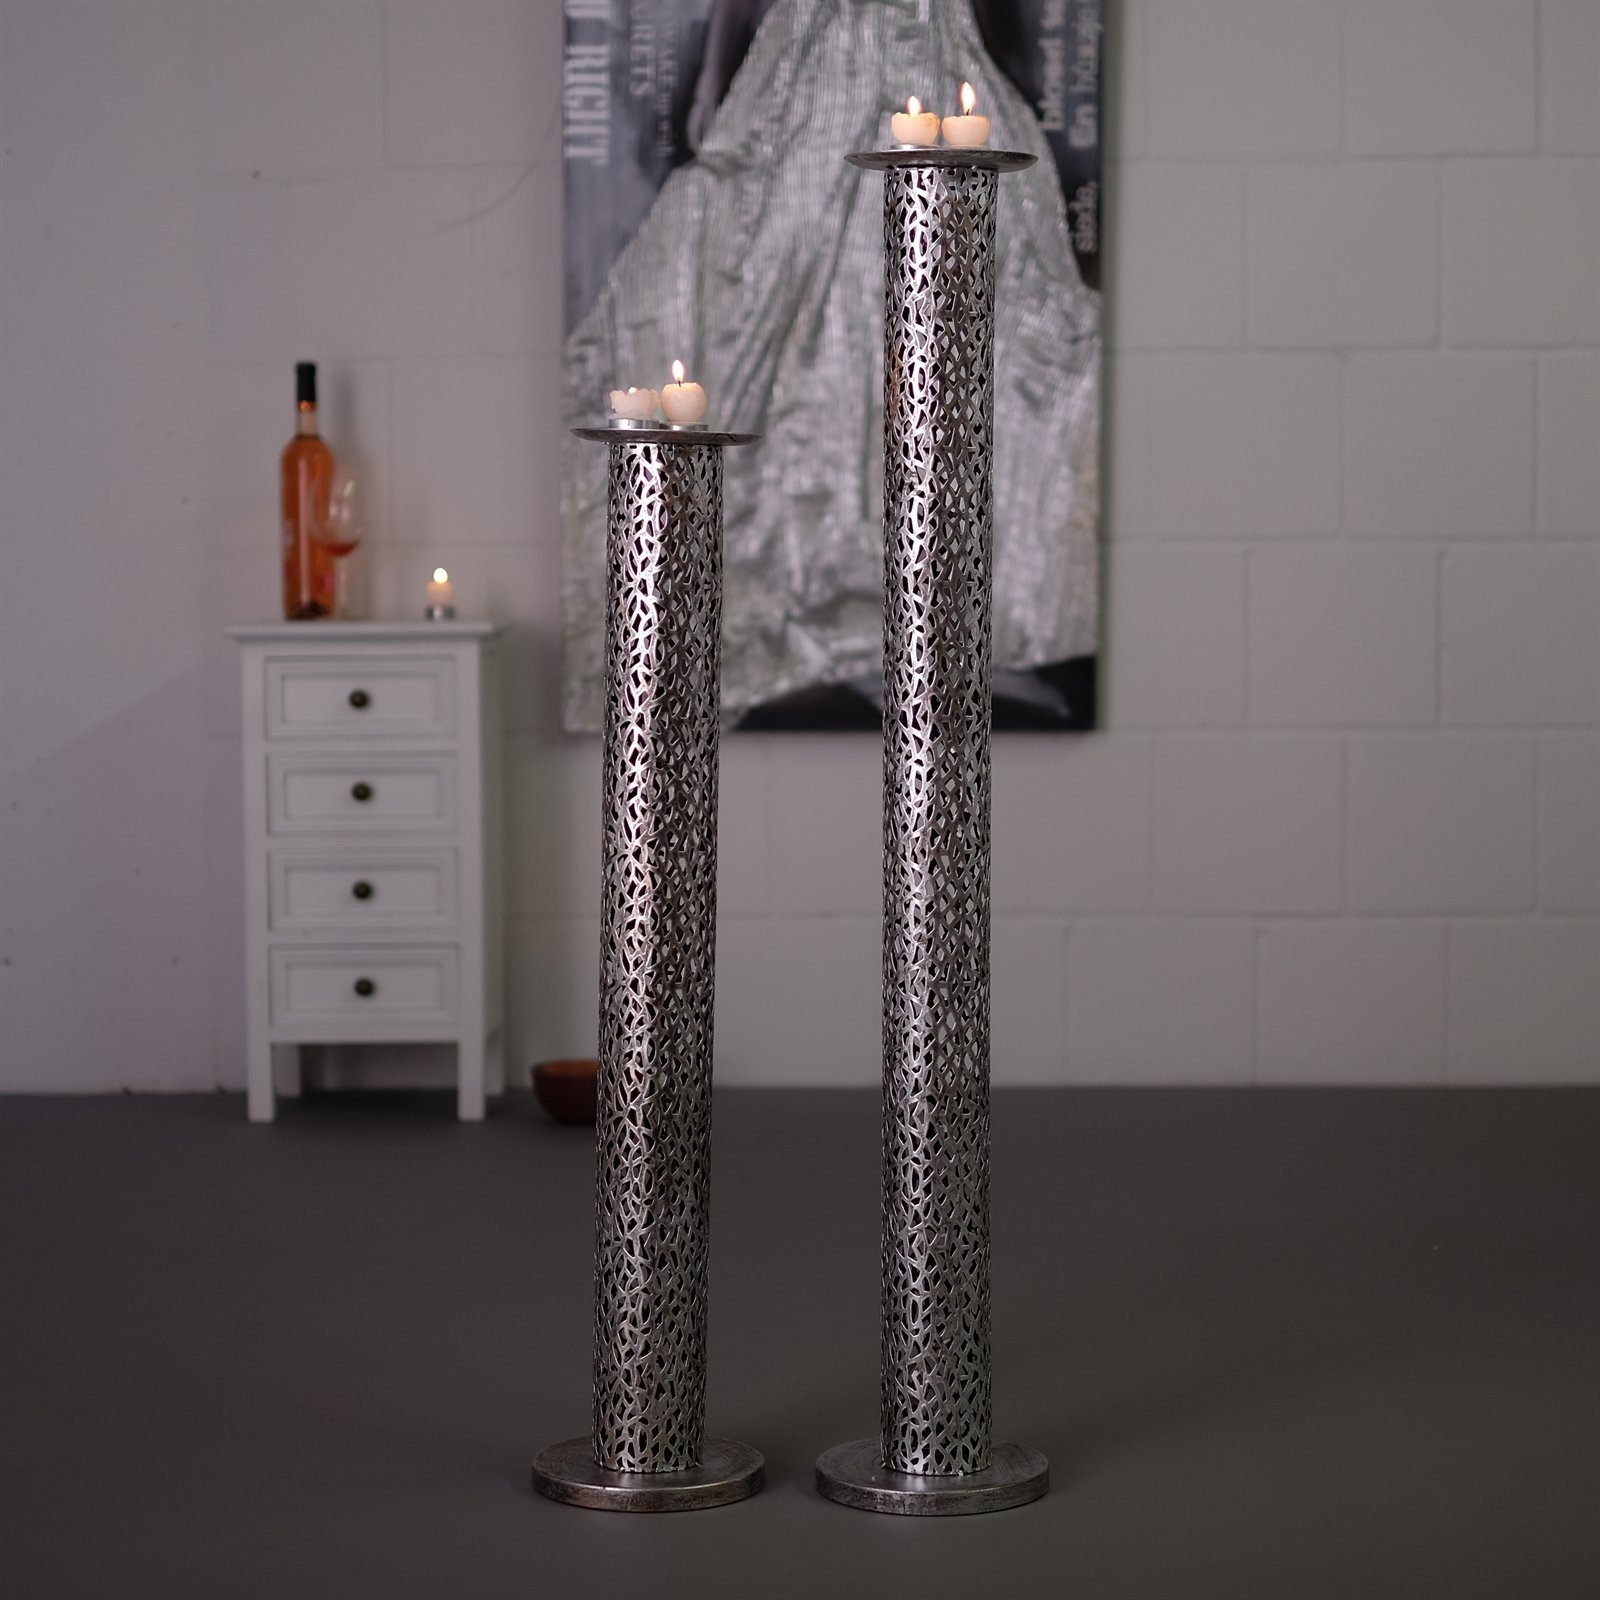 II", DESIGN Kerzenständer Metall RIESEN 100cm, DELIGHTS antik-silber, Säule KERZENSTÄNDER "ETERNAL